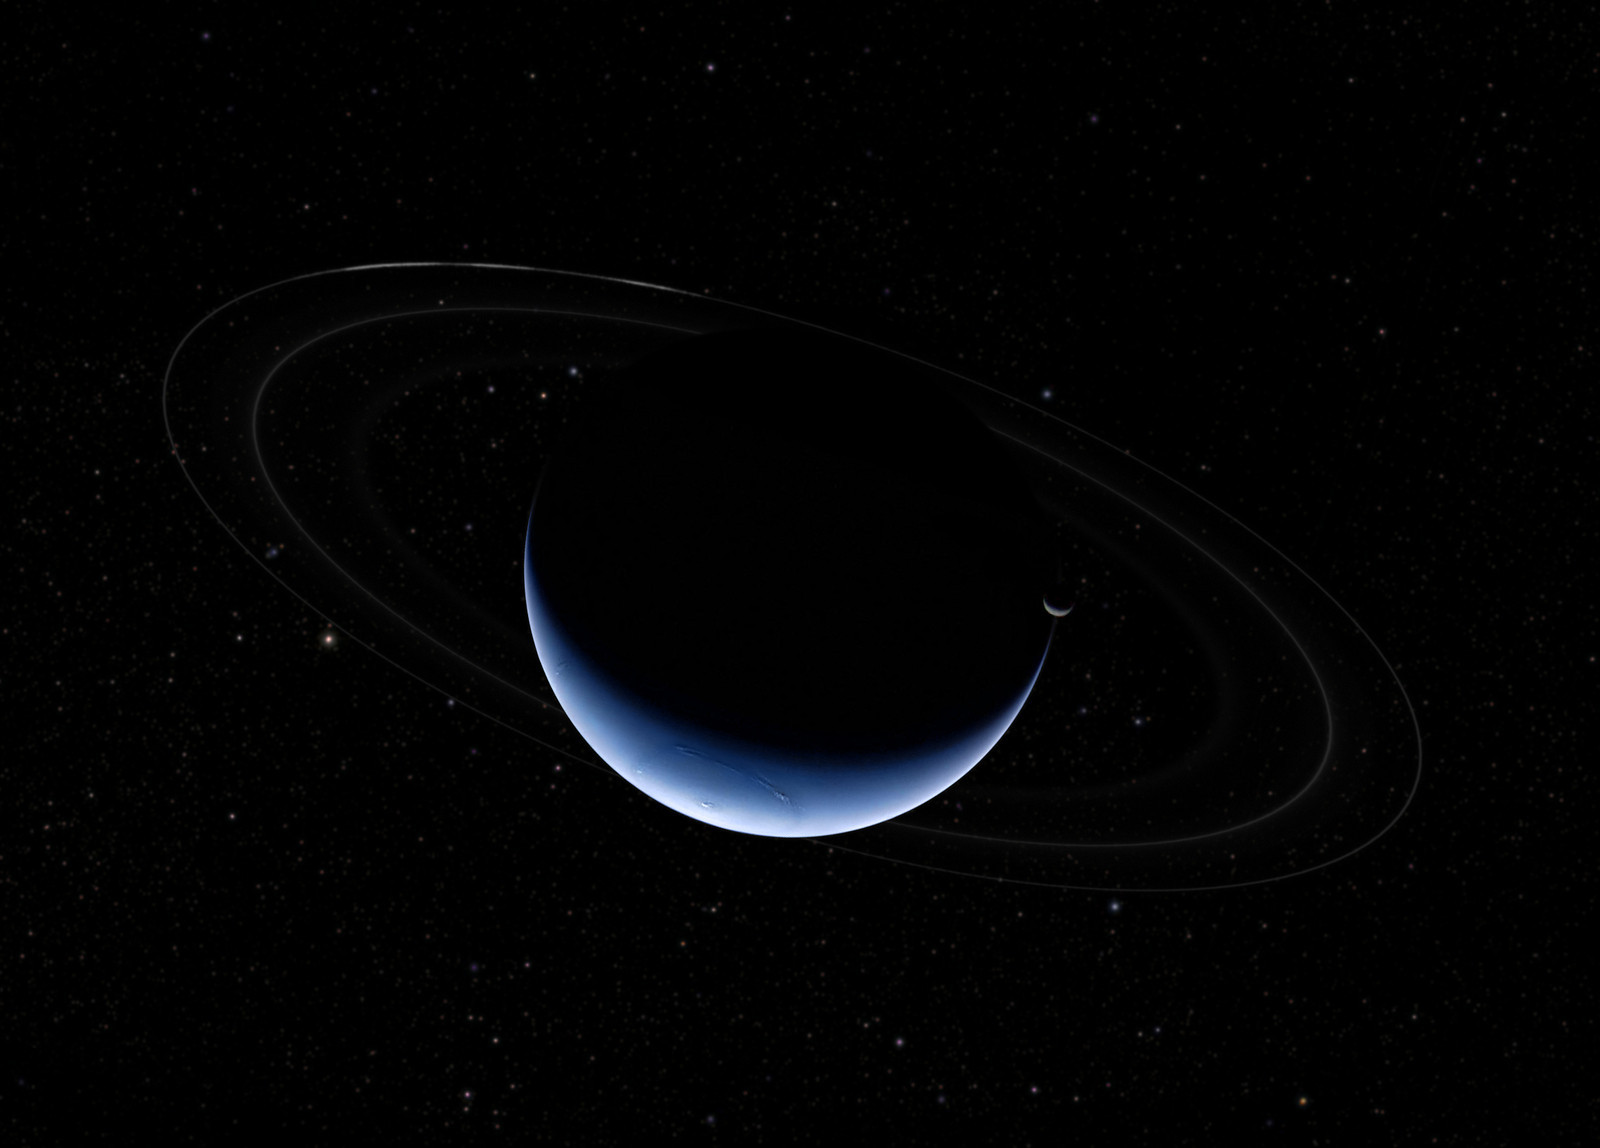 Neptune-South-Pole-Voyager-2_2327x1670-X3.jpg